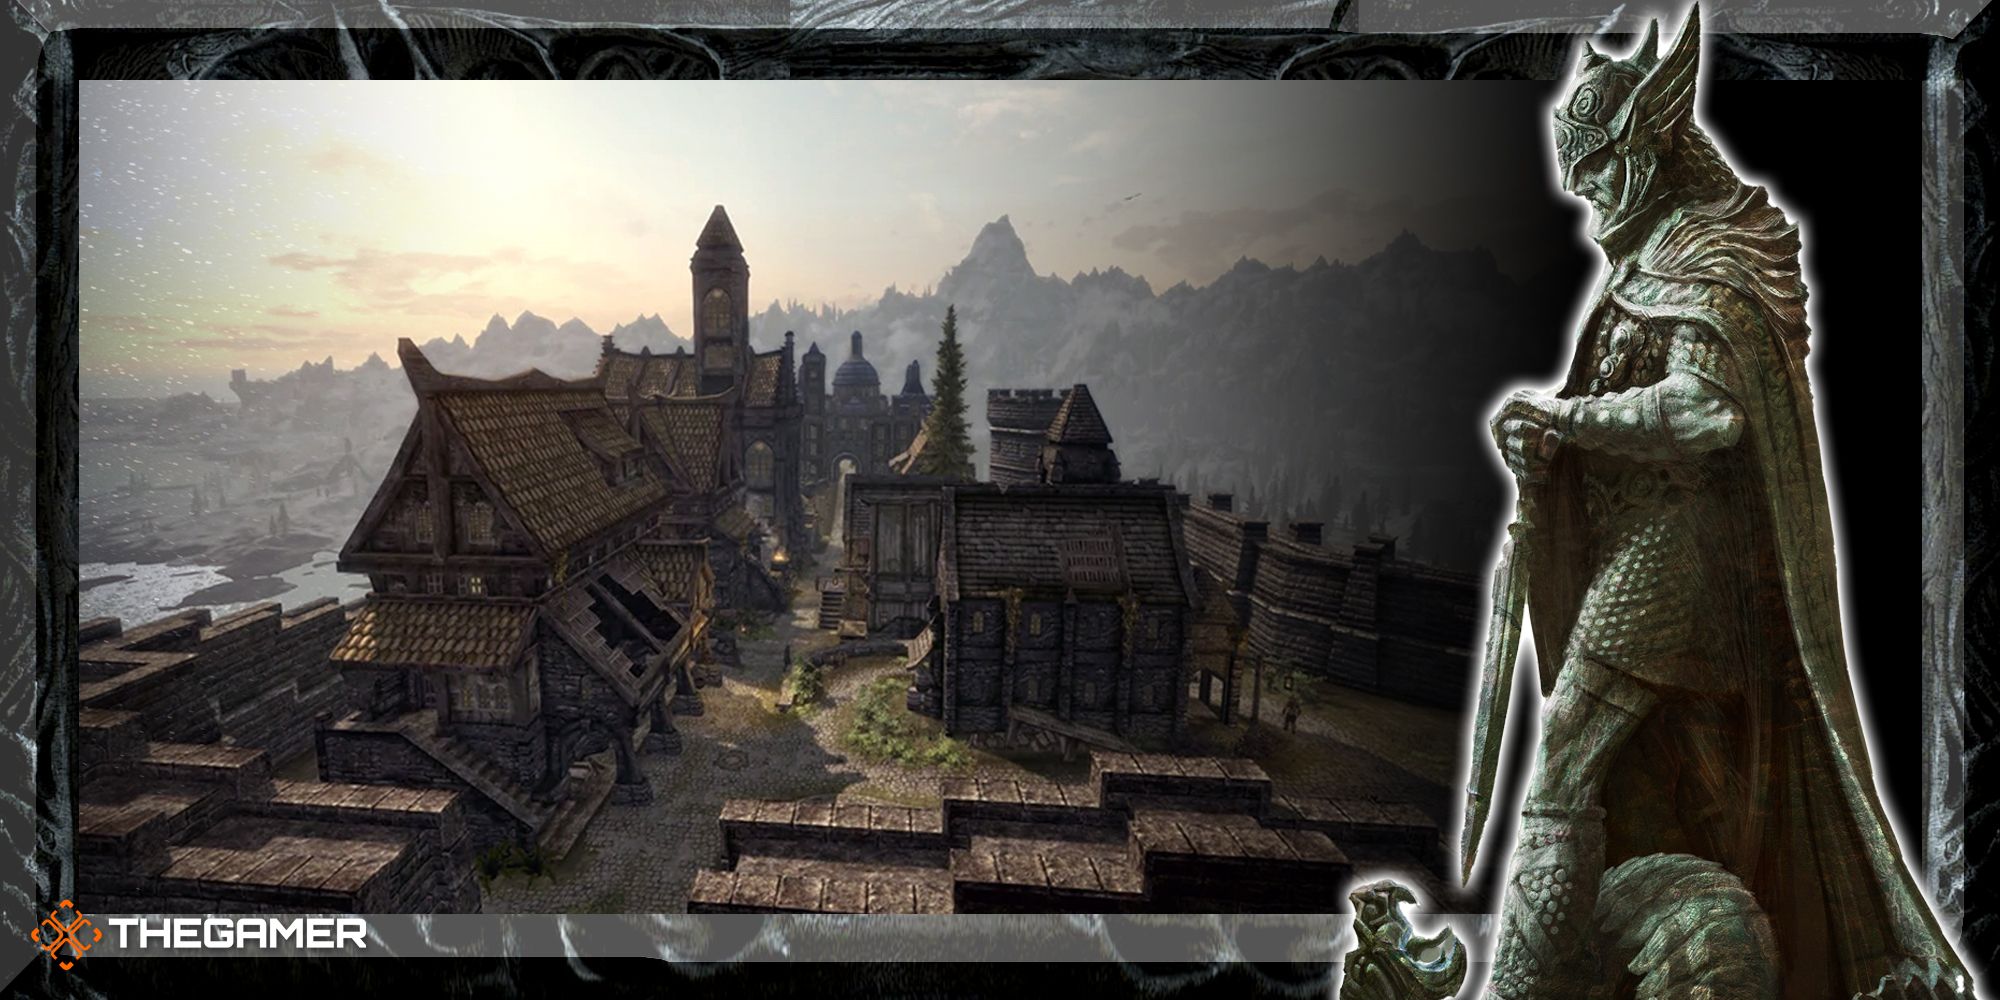 Art and screenshot from Skyrim.